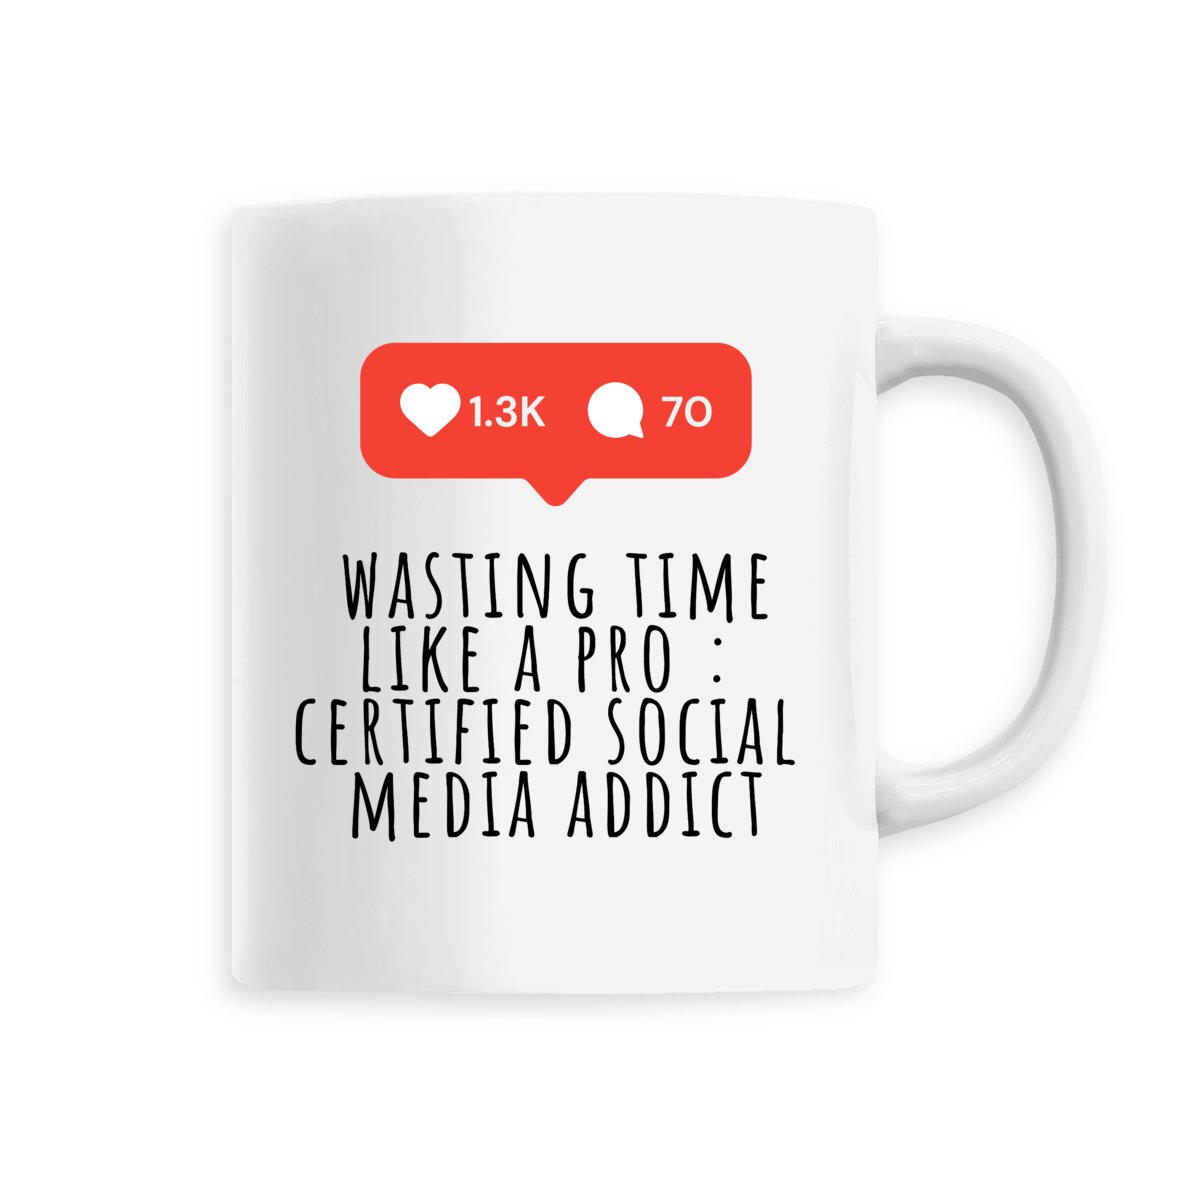 Wasting Time like a pro: certified social media addict Mug